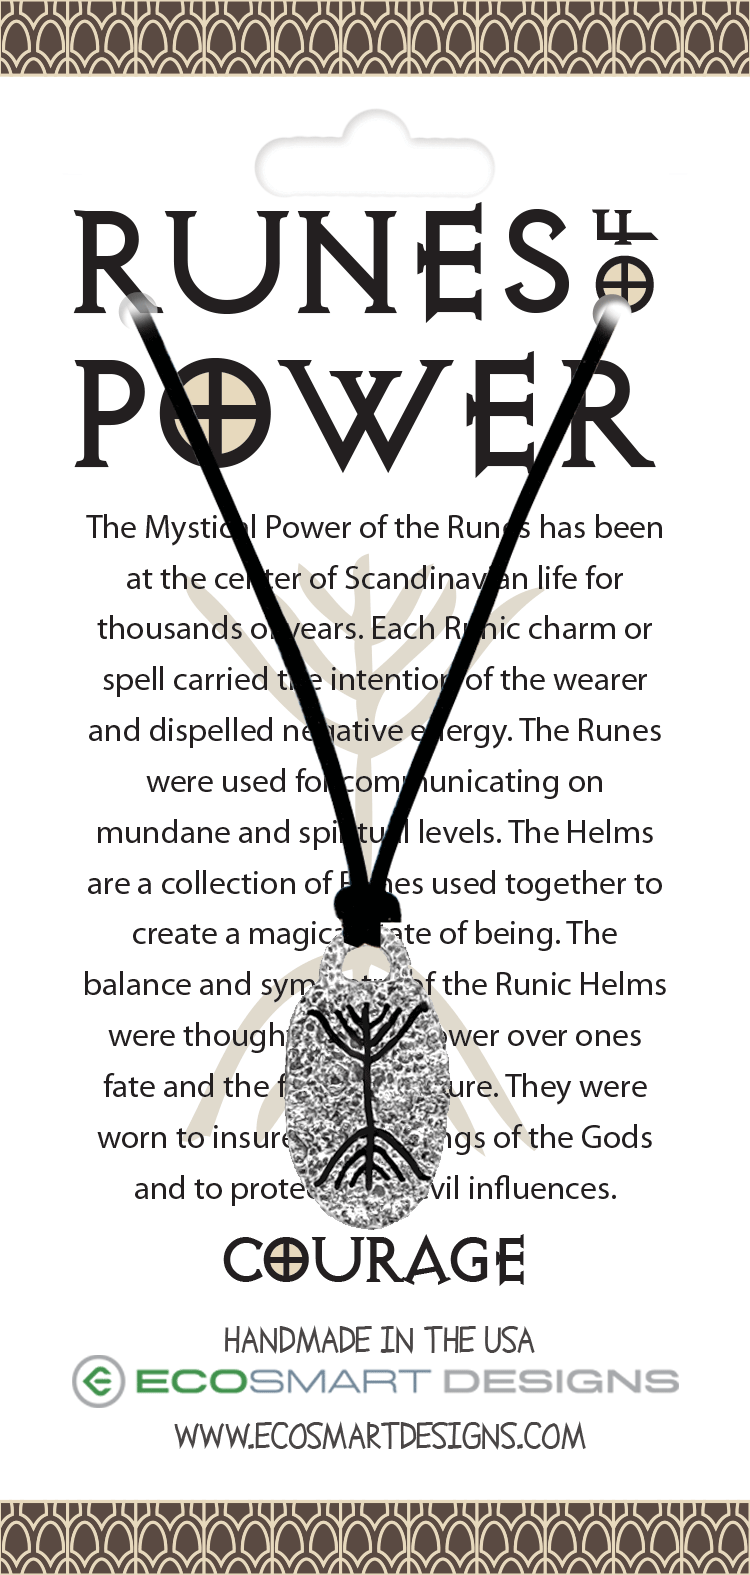 Courage Runestone Pewter Charm Necklace